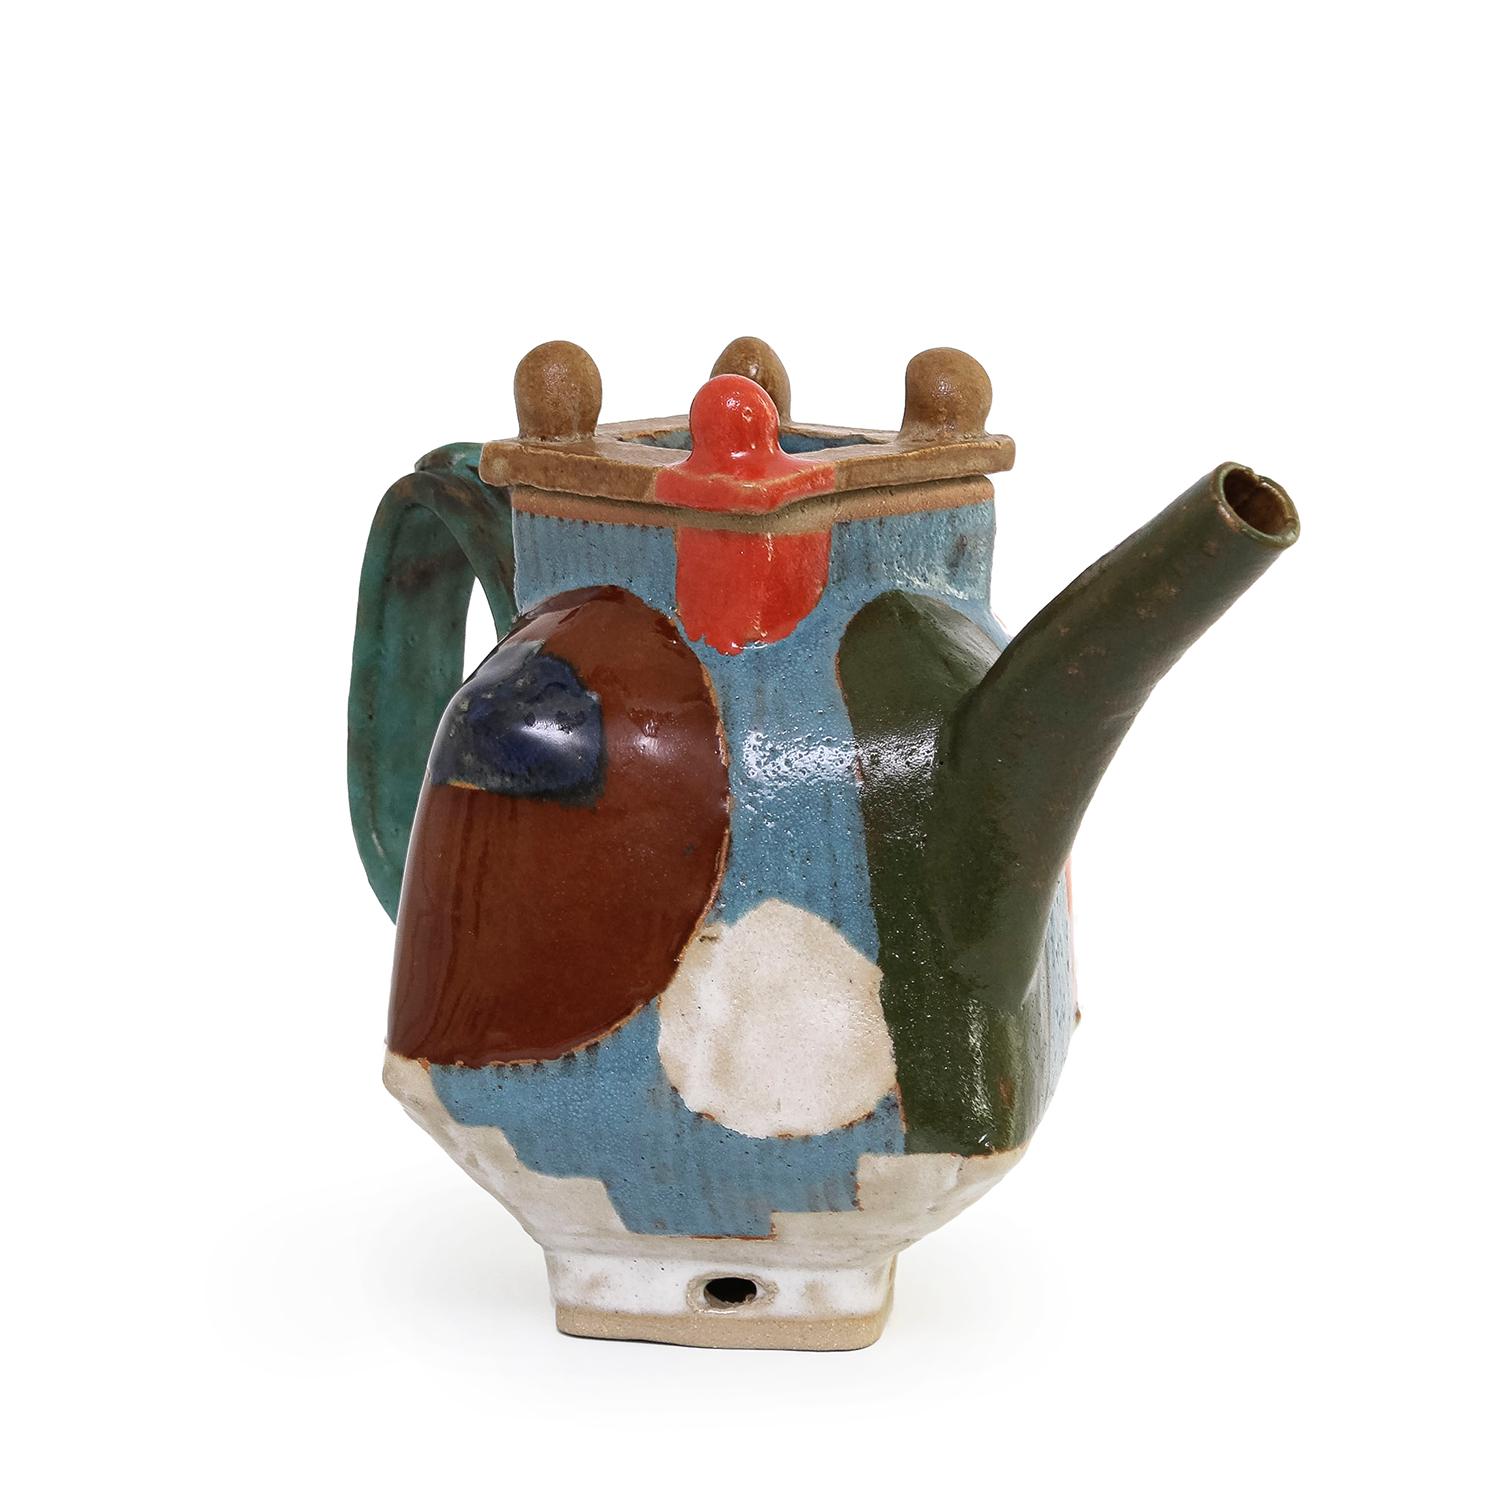 Teapot (INV# NP3730)
John Gill
stoneware and glaze
7.25 x 9.5 x 6”
2016
signed